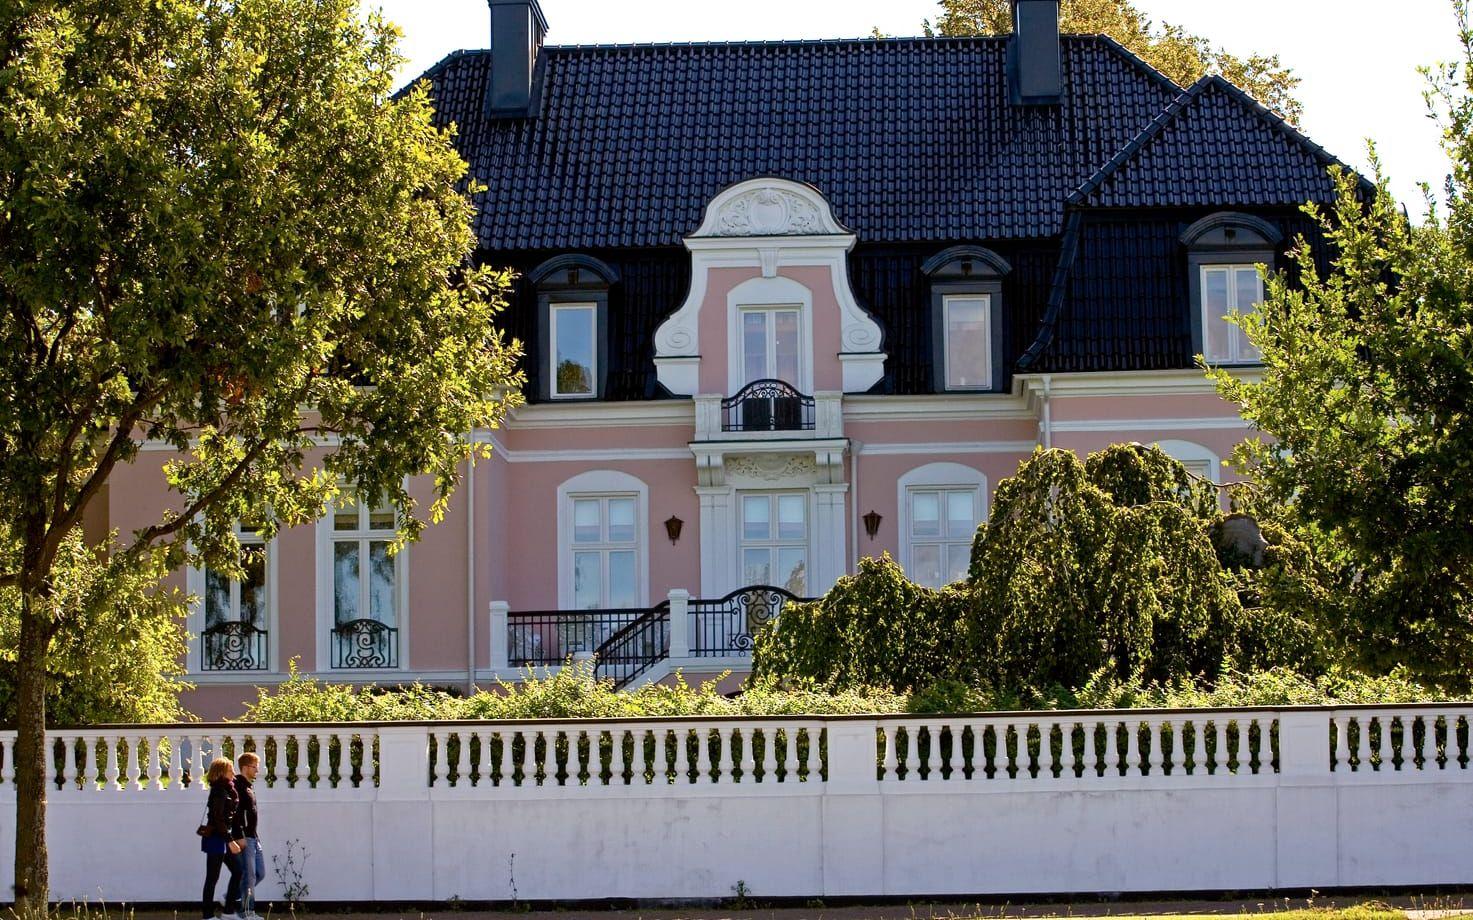 Bild från 2018 då Zlatan Ibrahimovic ägde huset. 